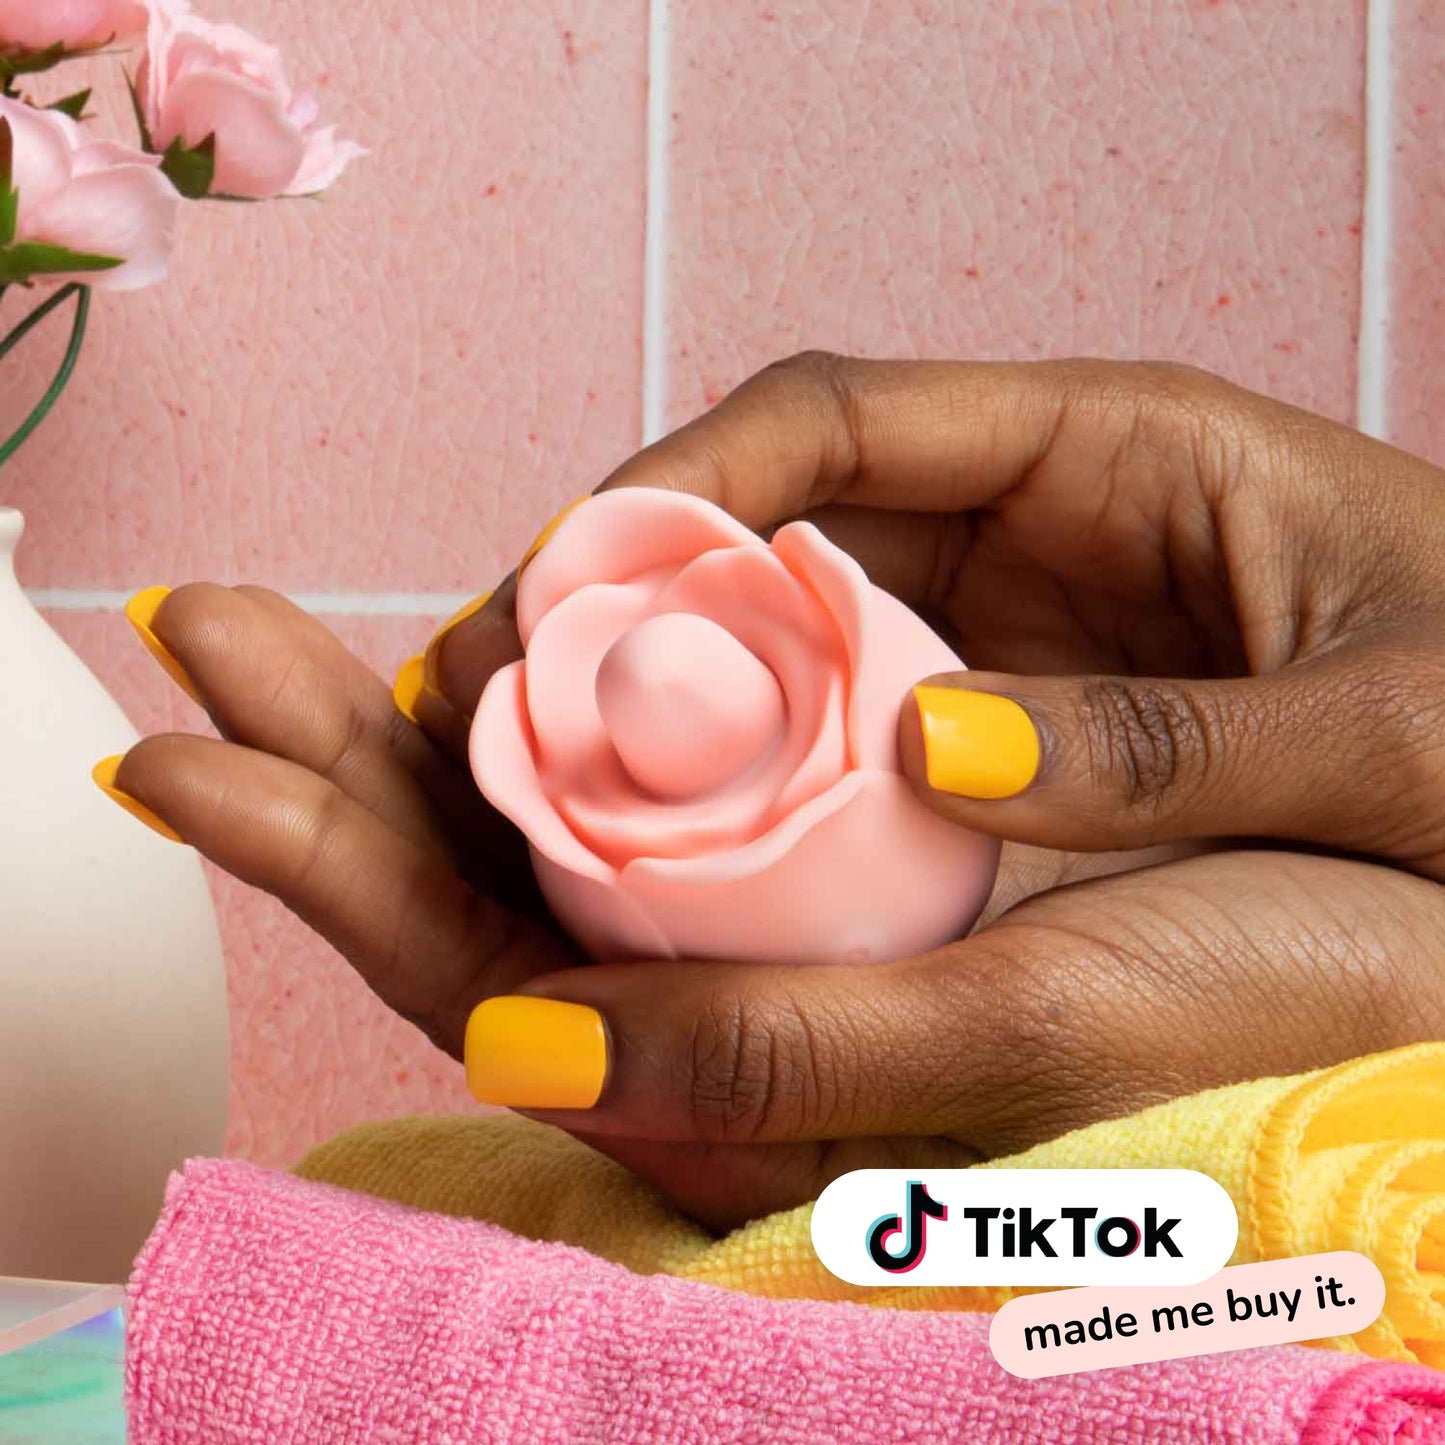 Flora licking rose toy pink rose vibrator for women with tiktok badge